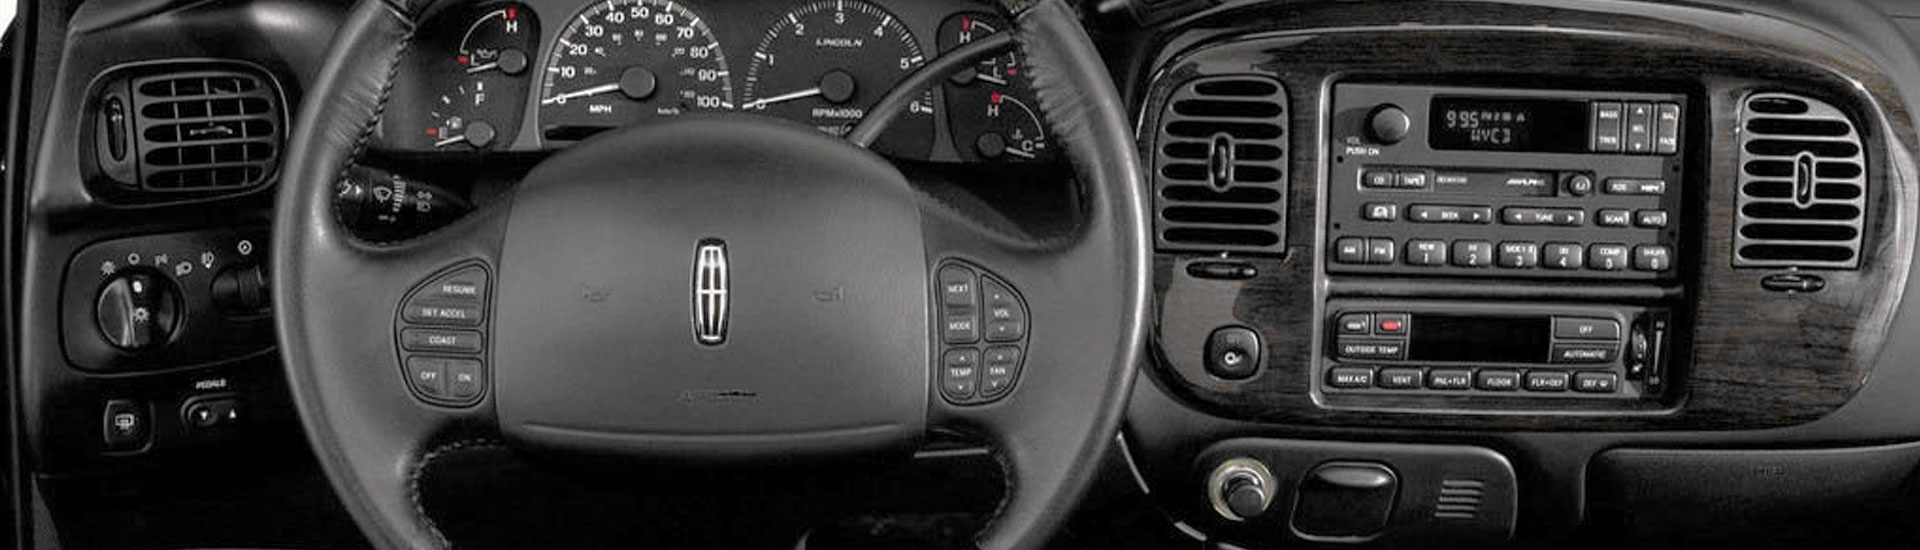 Dash Kit Trim for Lincoln Blackwood 02 2002 Auto Interior Detailing Dashboard